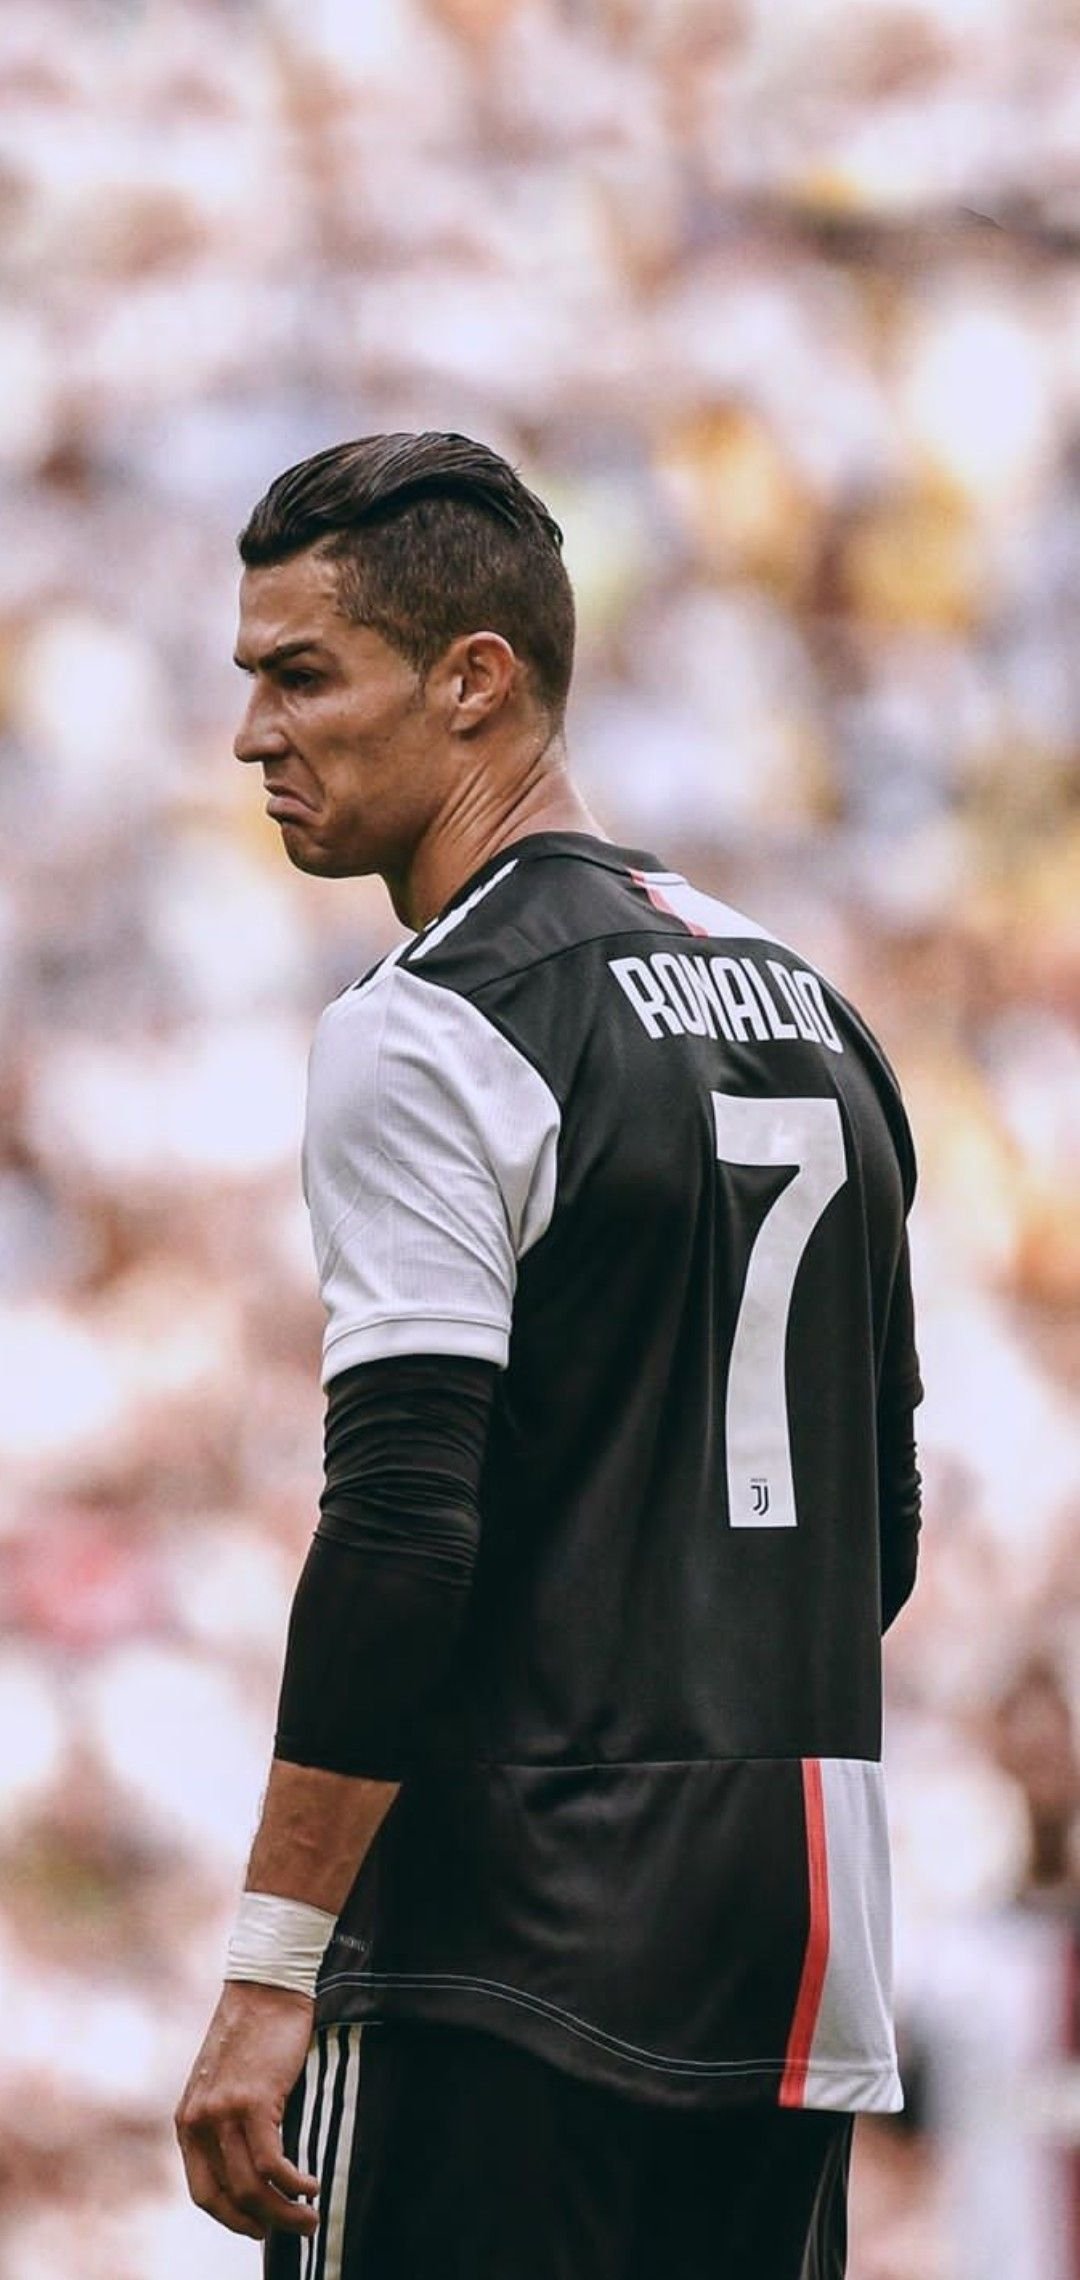 Ronaldo Quotes Images Wallpaper